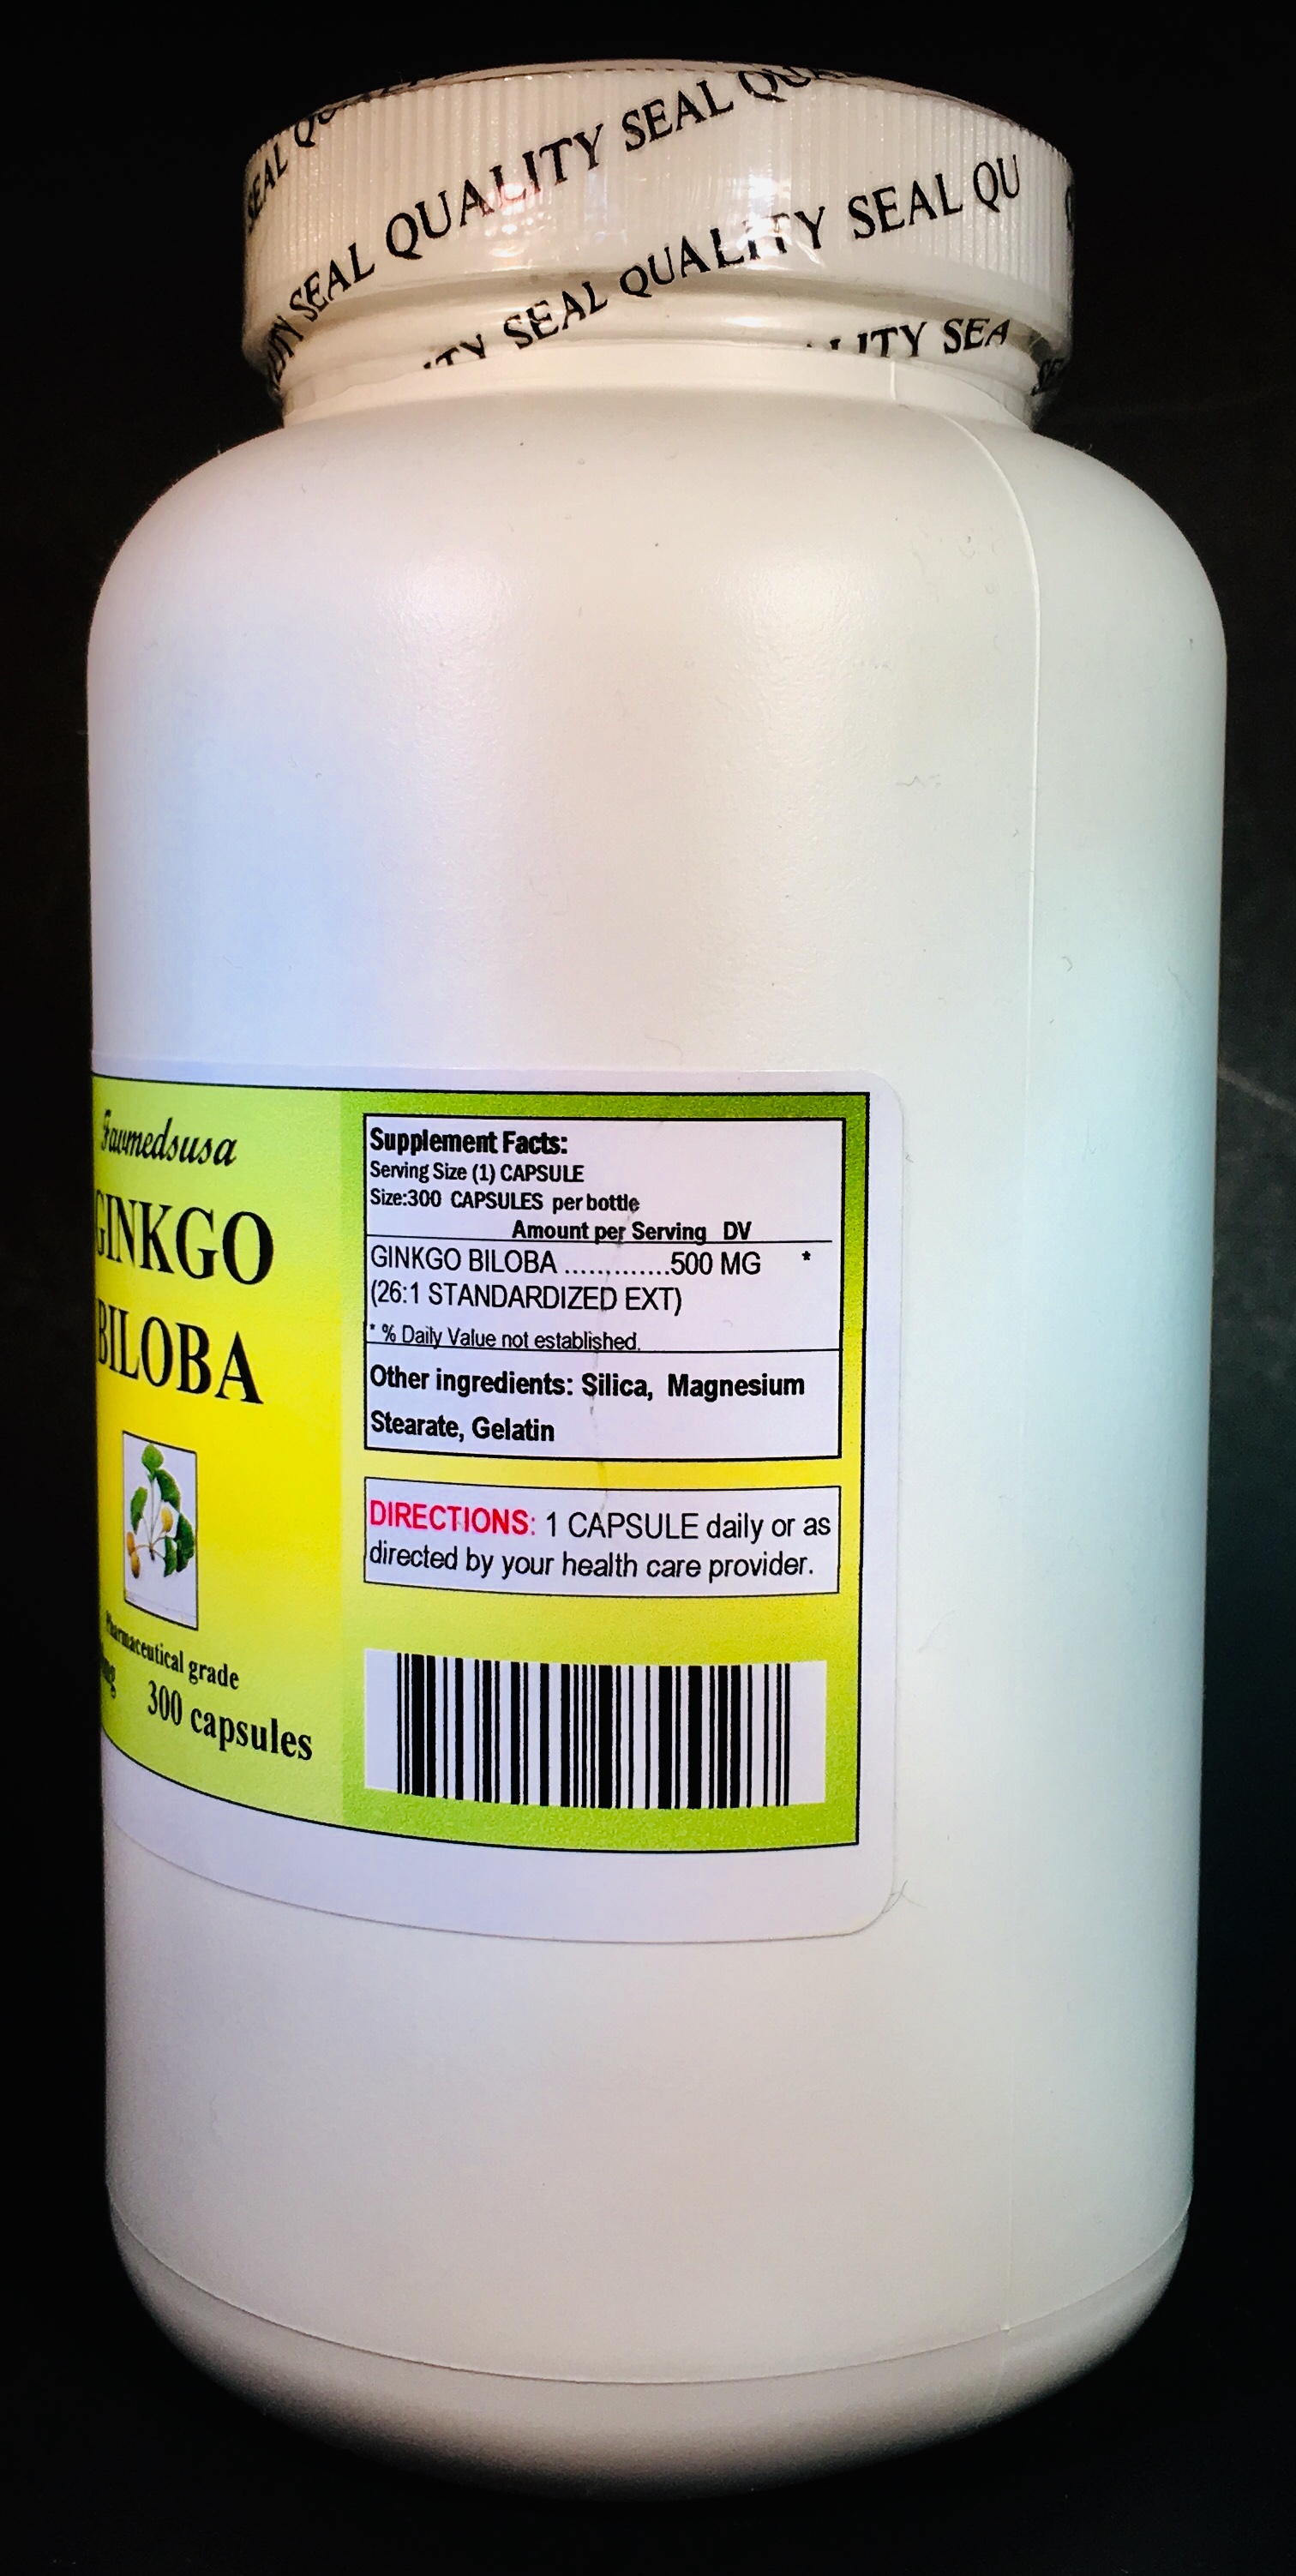 Ginkgo Biloba 500mg - 900 (3x300) capsules